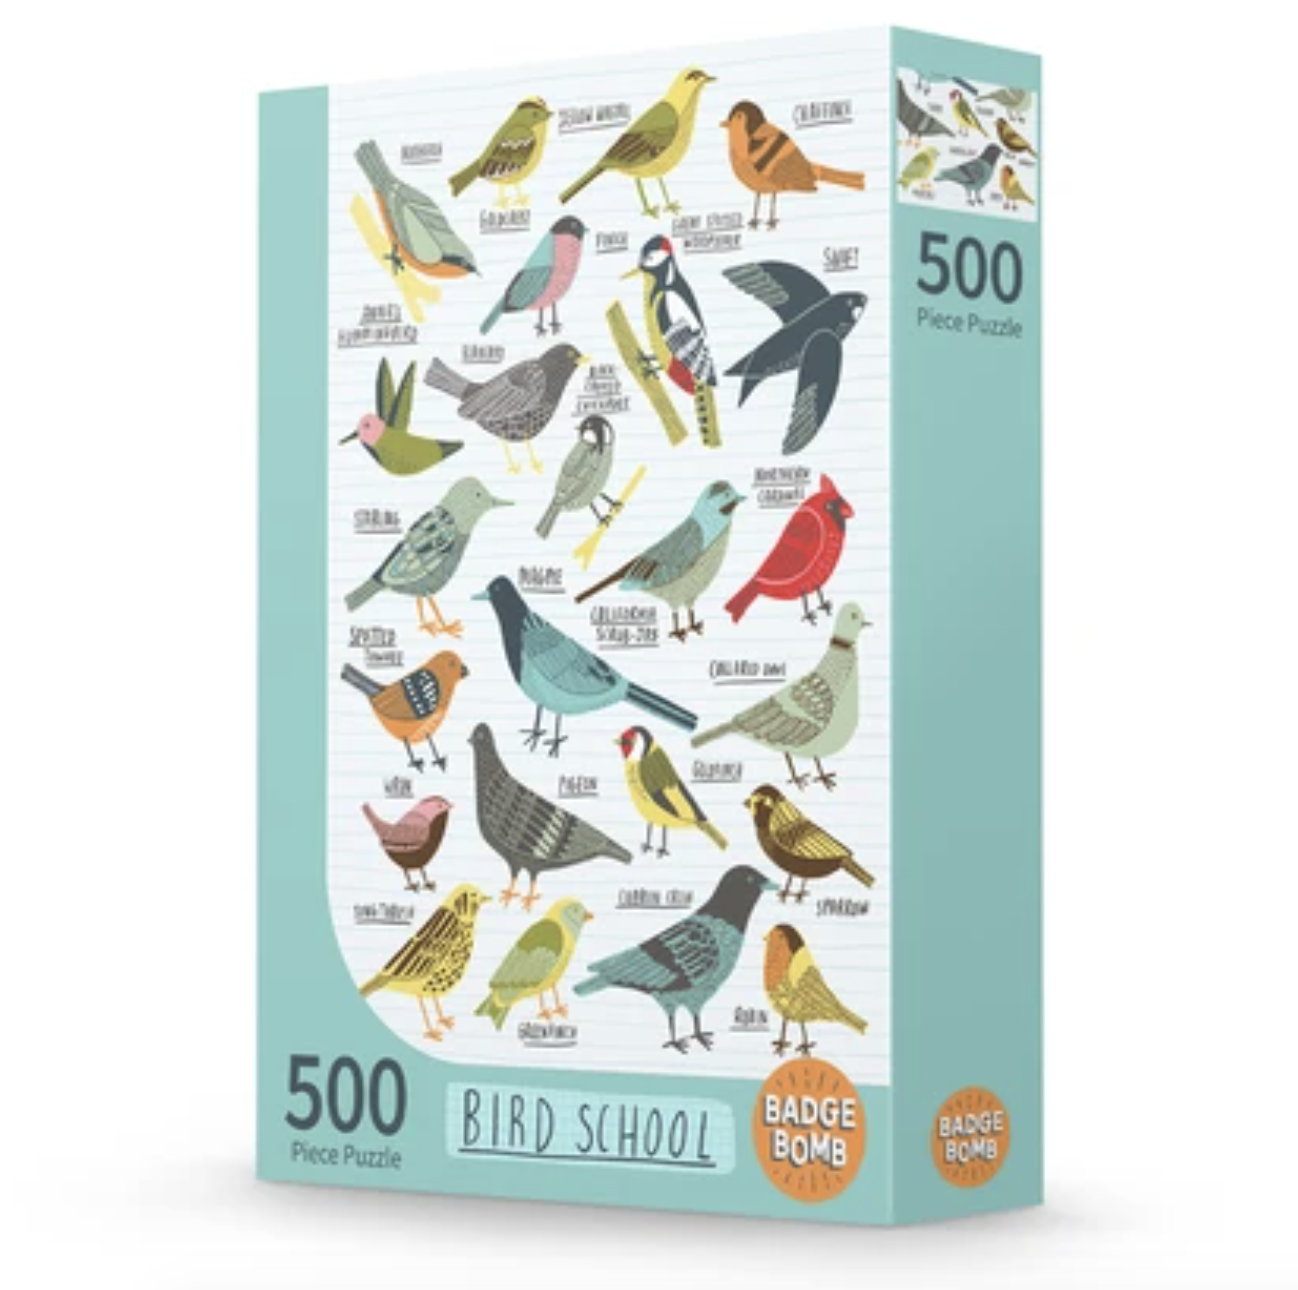 The box of the Bird School puzzle